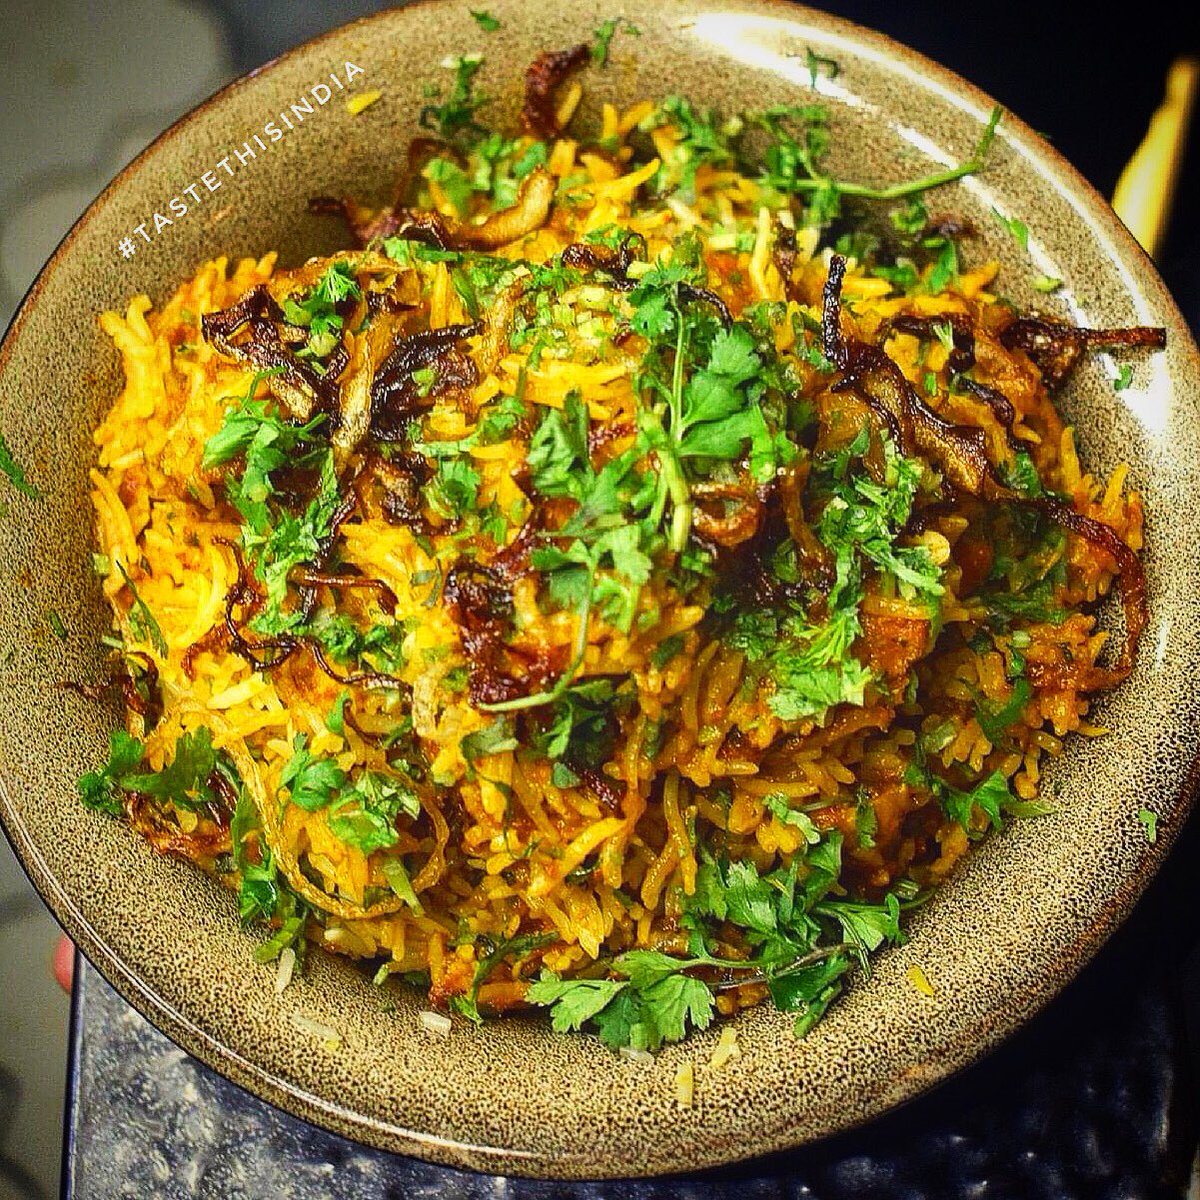 Veg pulao is easy and quick indian food
#vegpulao #pulao #vegetarianrecipe #indianfoodblog #foodblogger #chennaifoodblogger #chennaifoodie #tastethisindia #foodblogging #healthyeating #vegetable #indiancuisine #lunchscene #southindianfood #indianfoodbuff #northindianfood